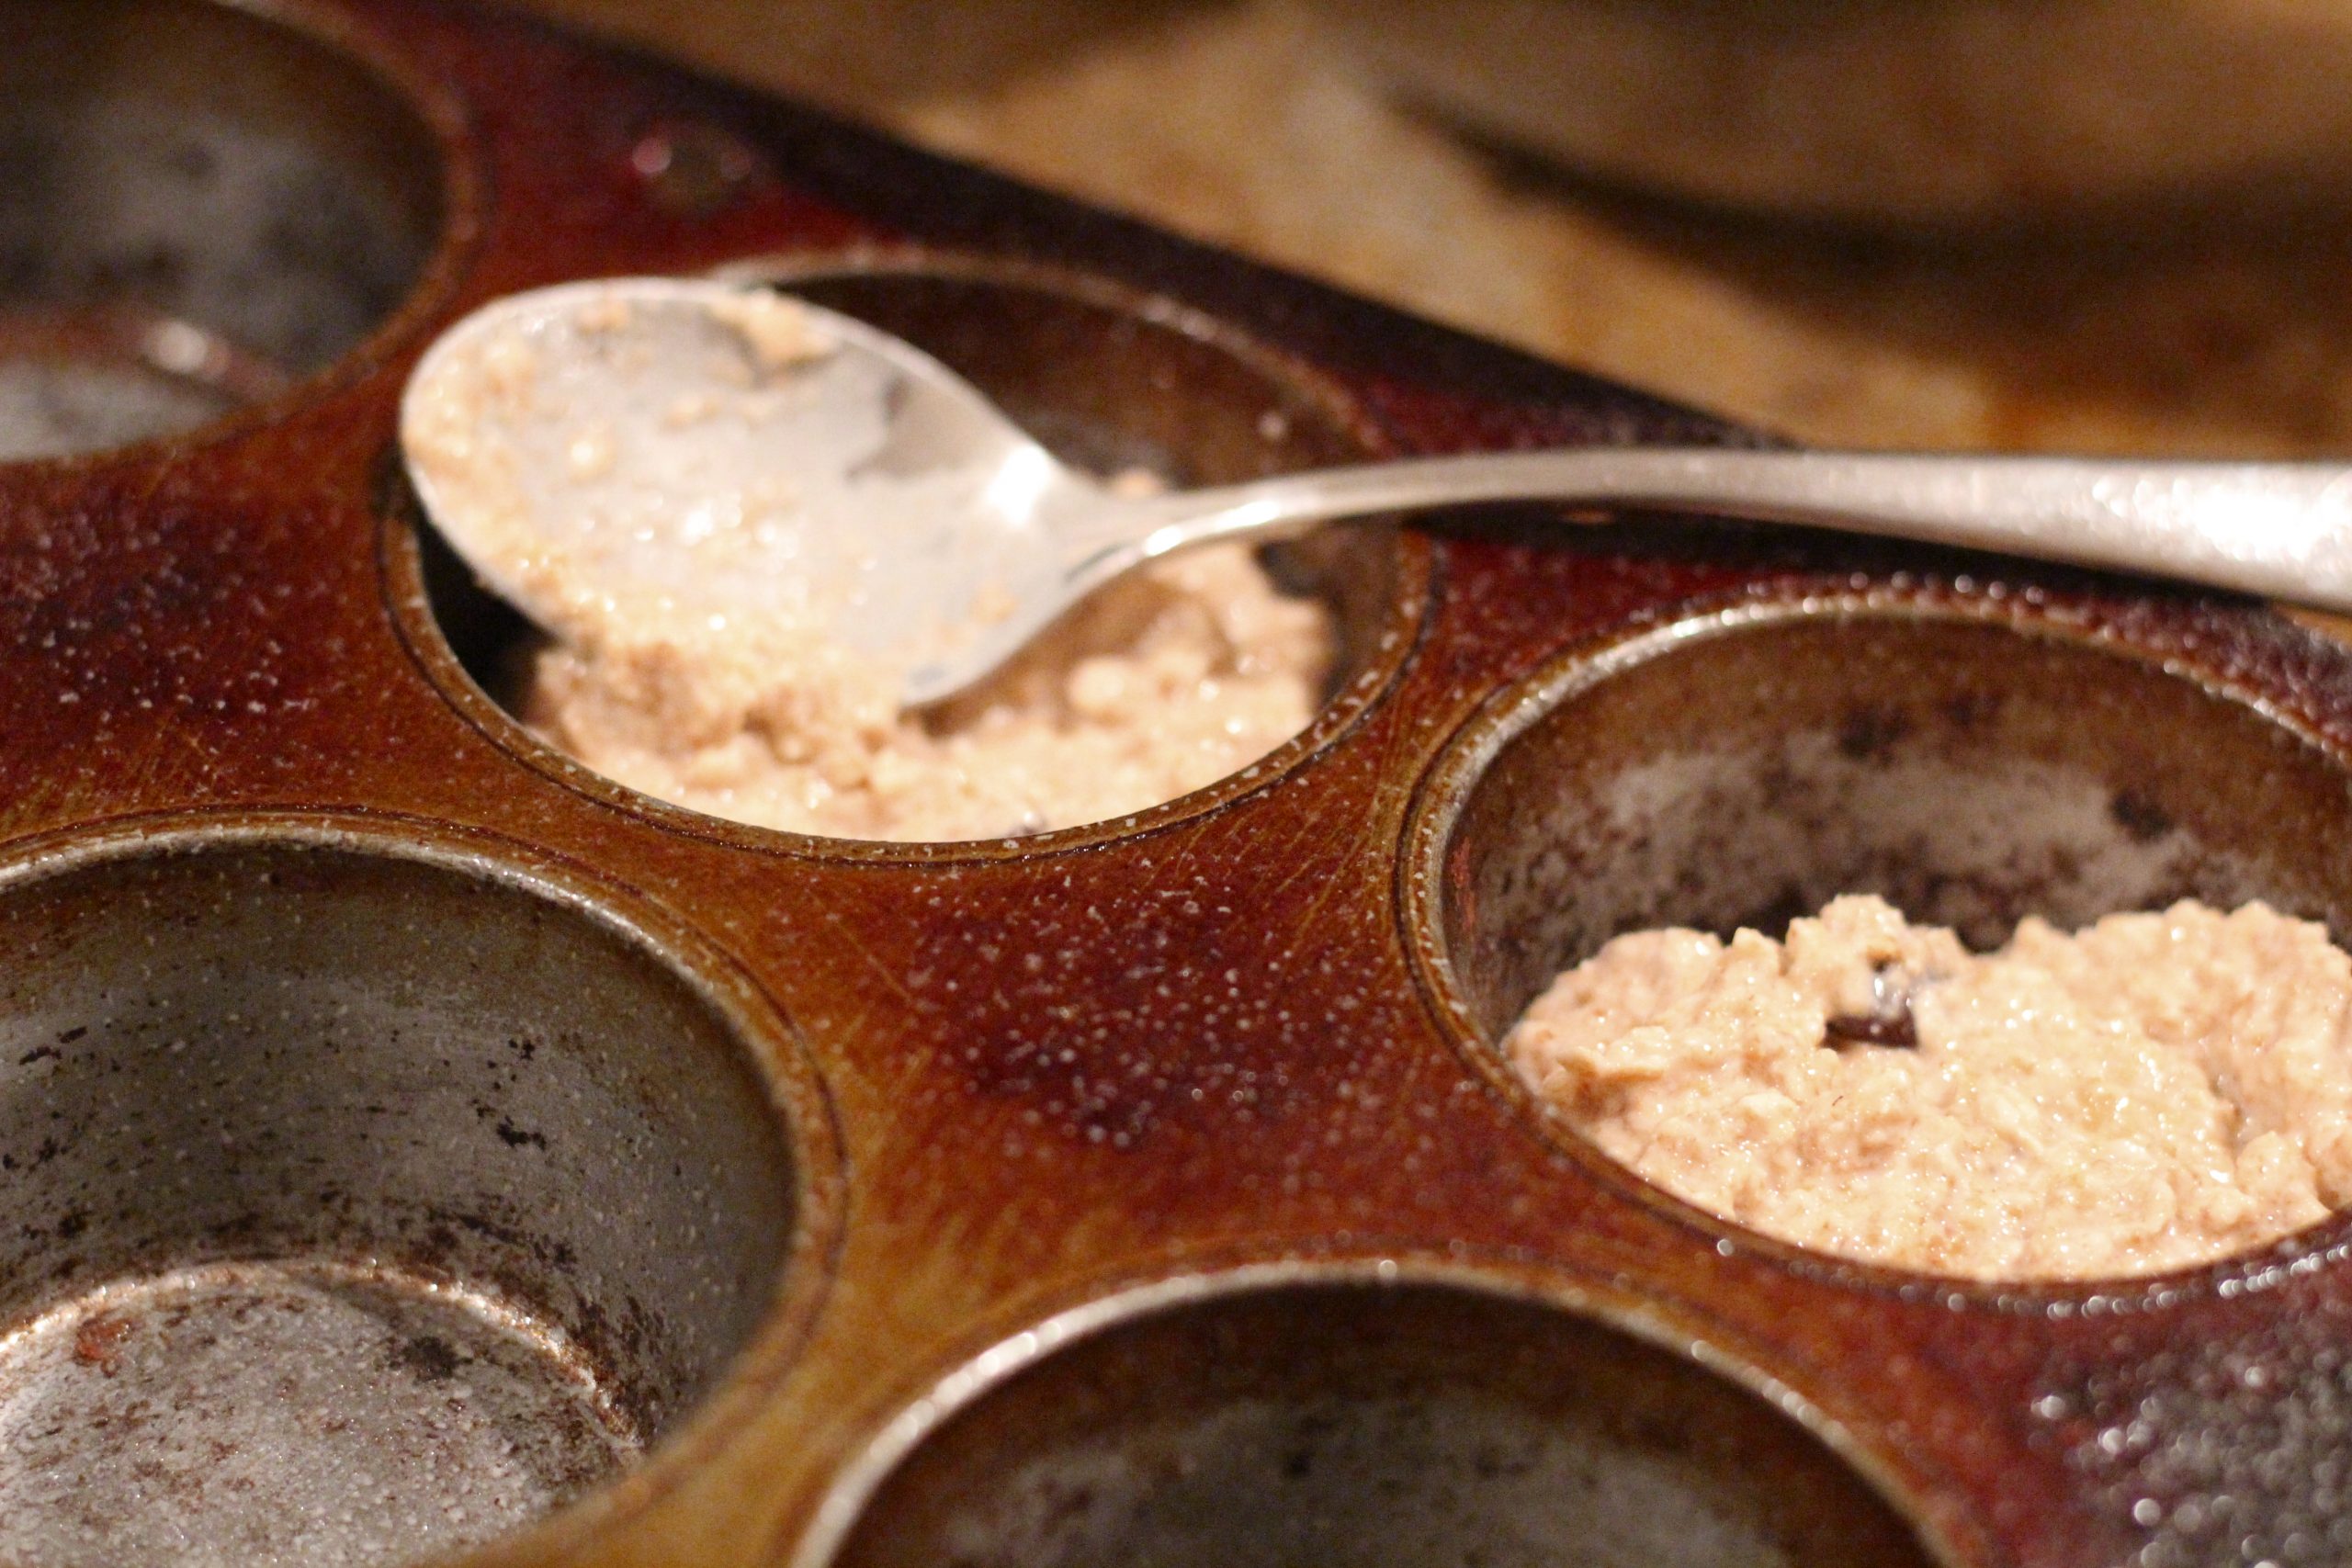 muffin pan